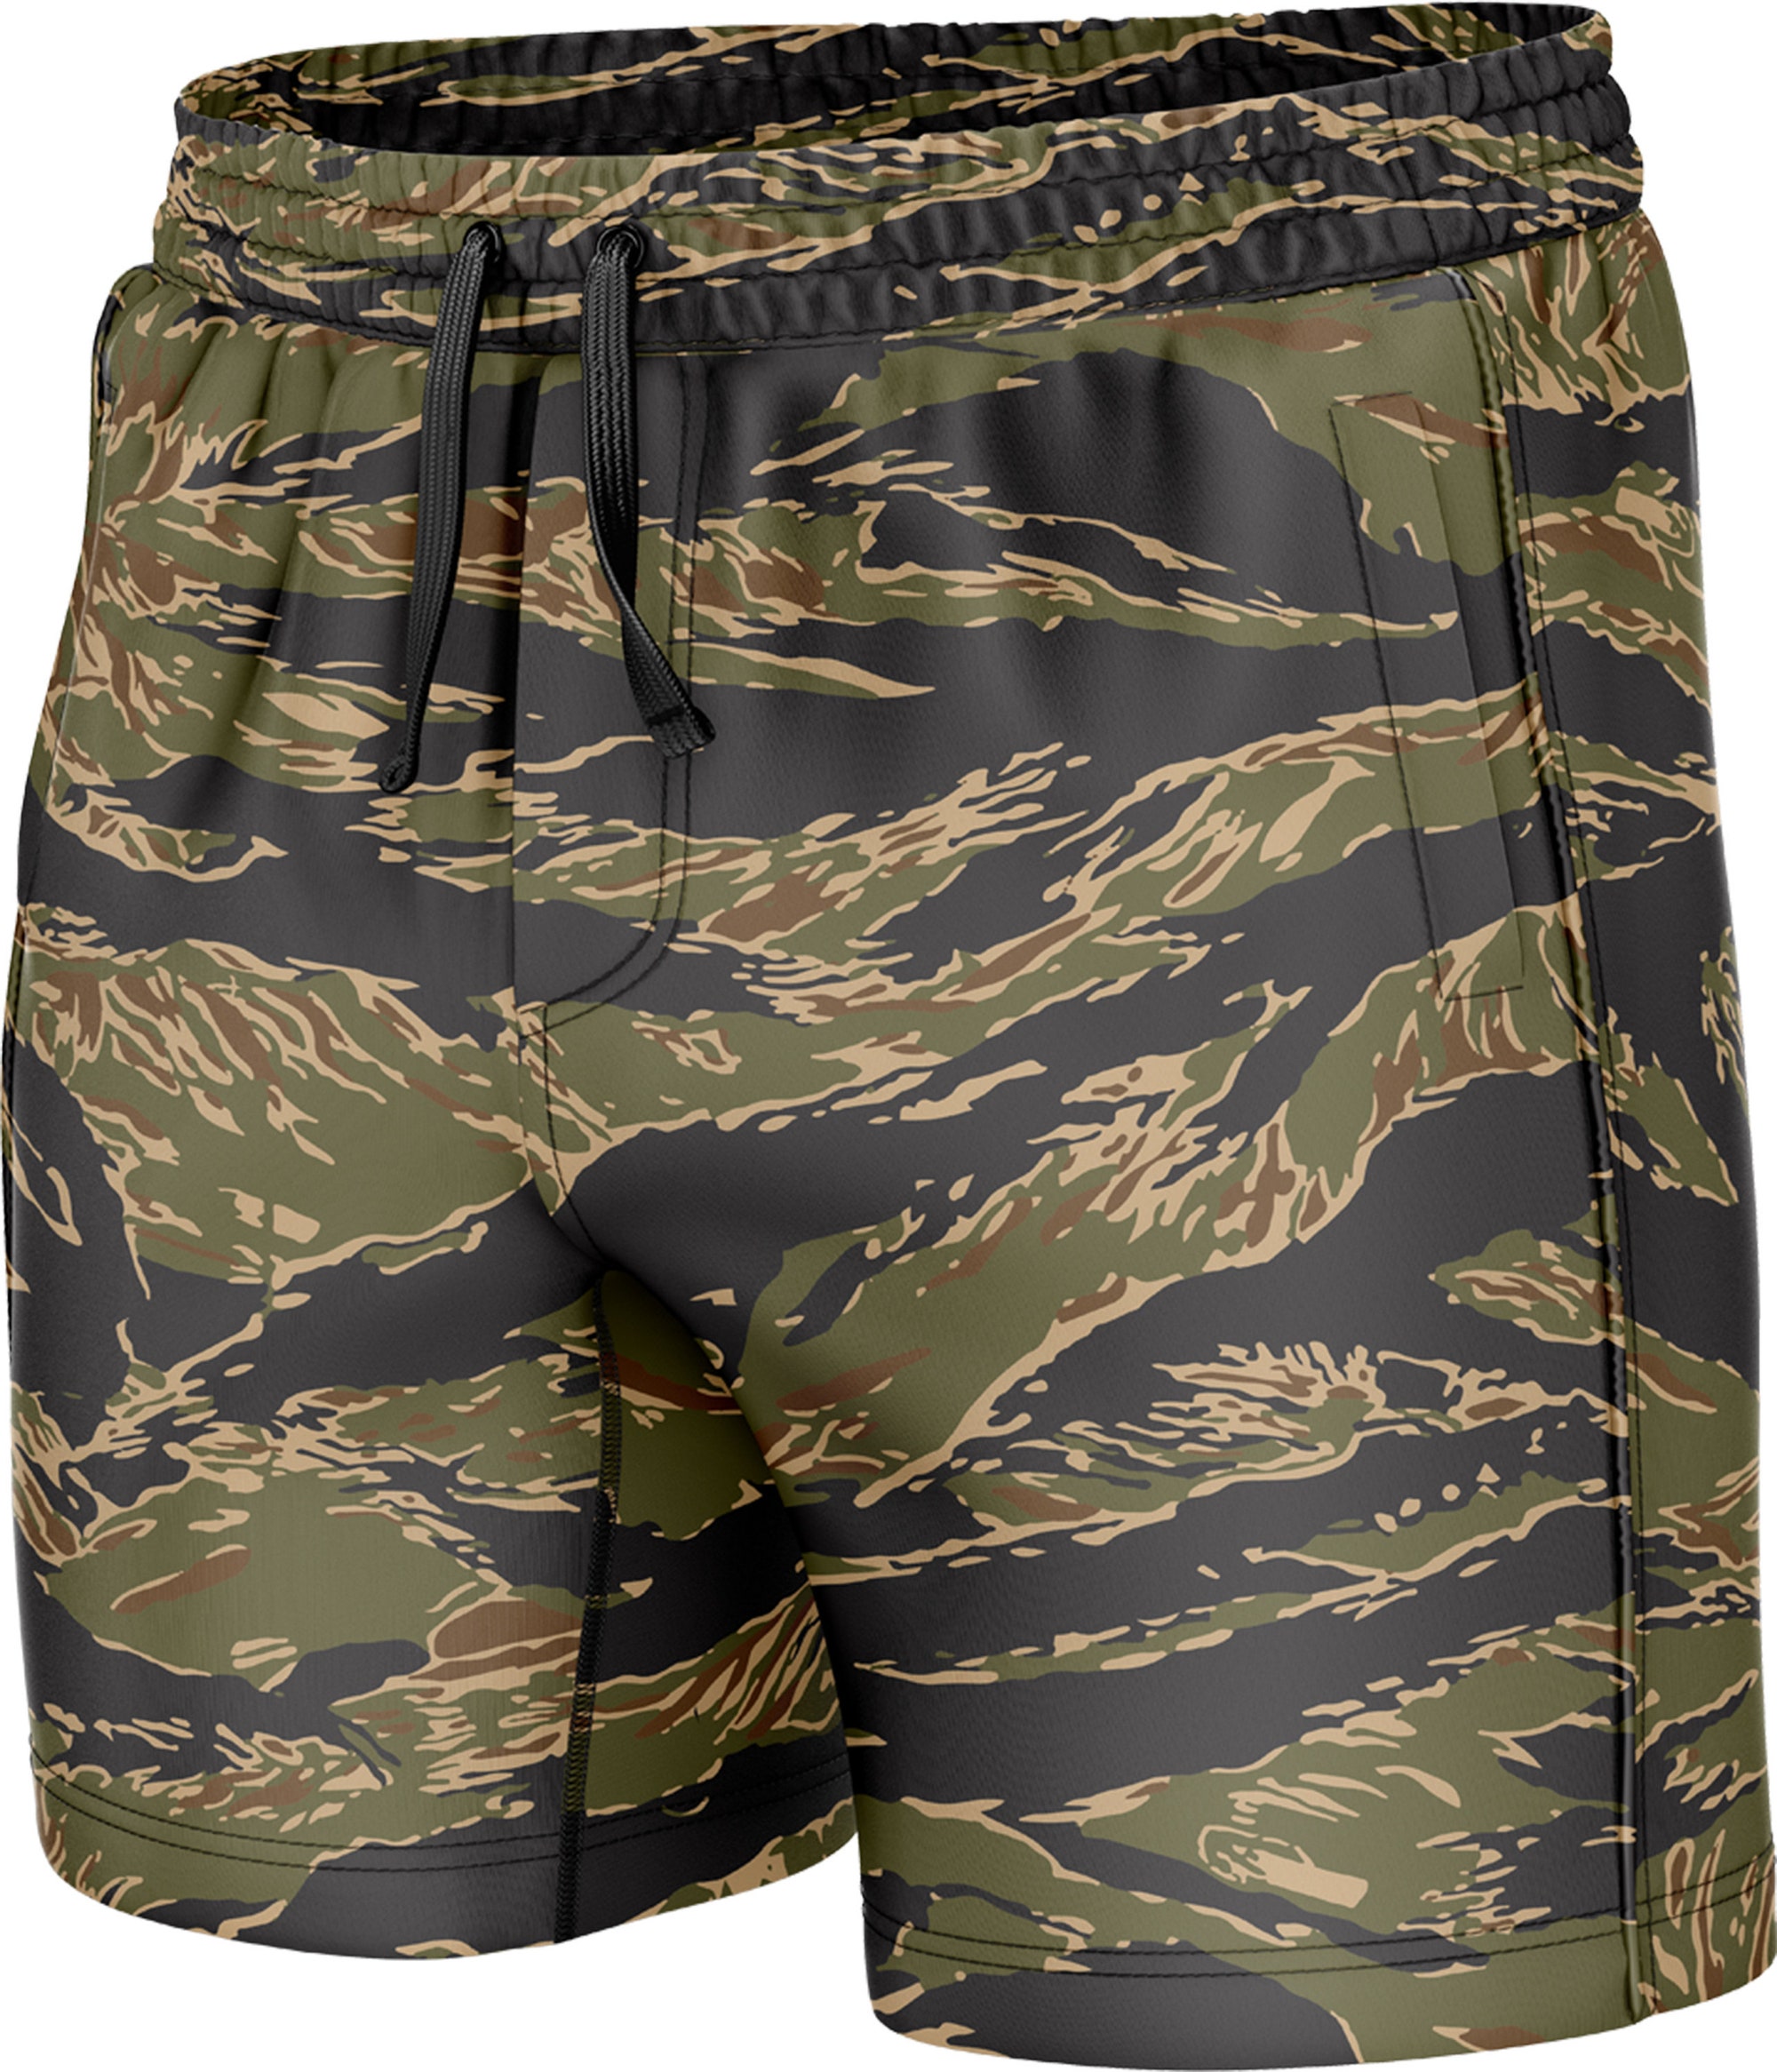 Jungle Tiger Camo Chubs Shorts